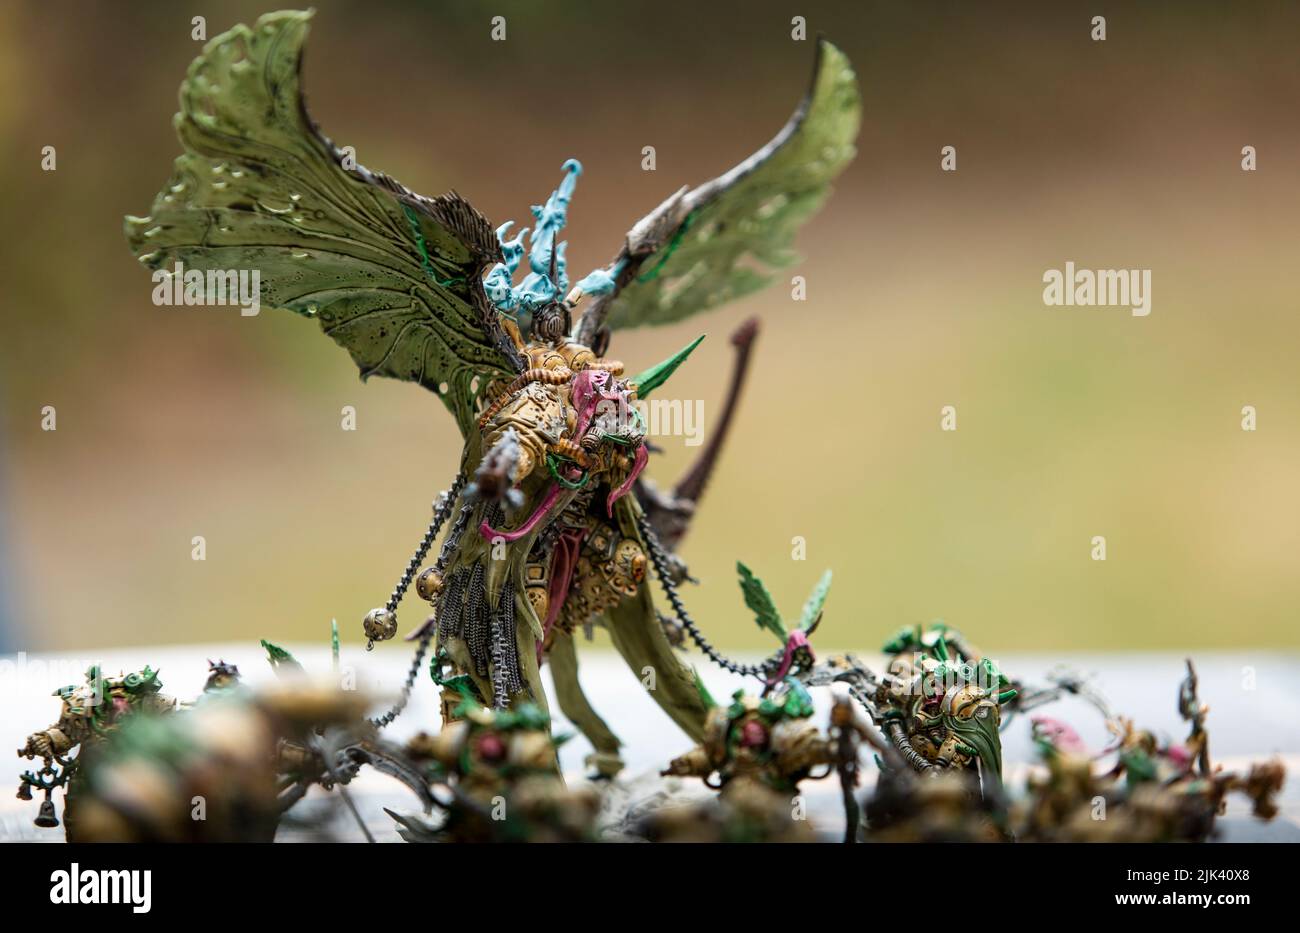 Chaos Space Marines Death Guard Painted Warhammer Figures Games Workshop © Clarissa Debenham / Alamy Stock Photo